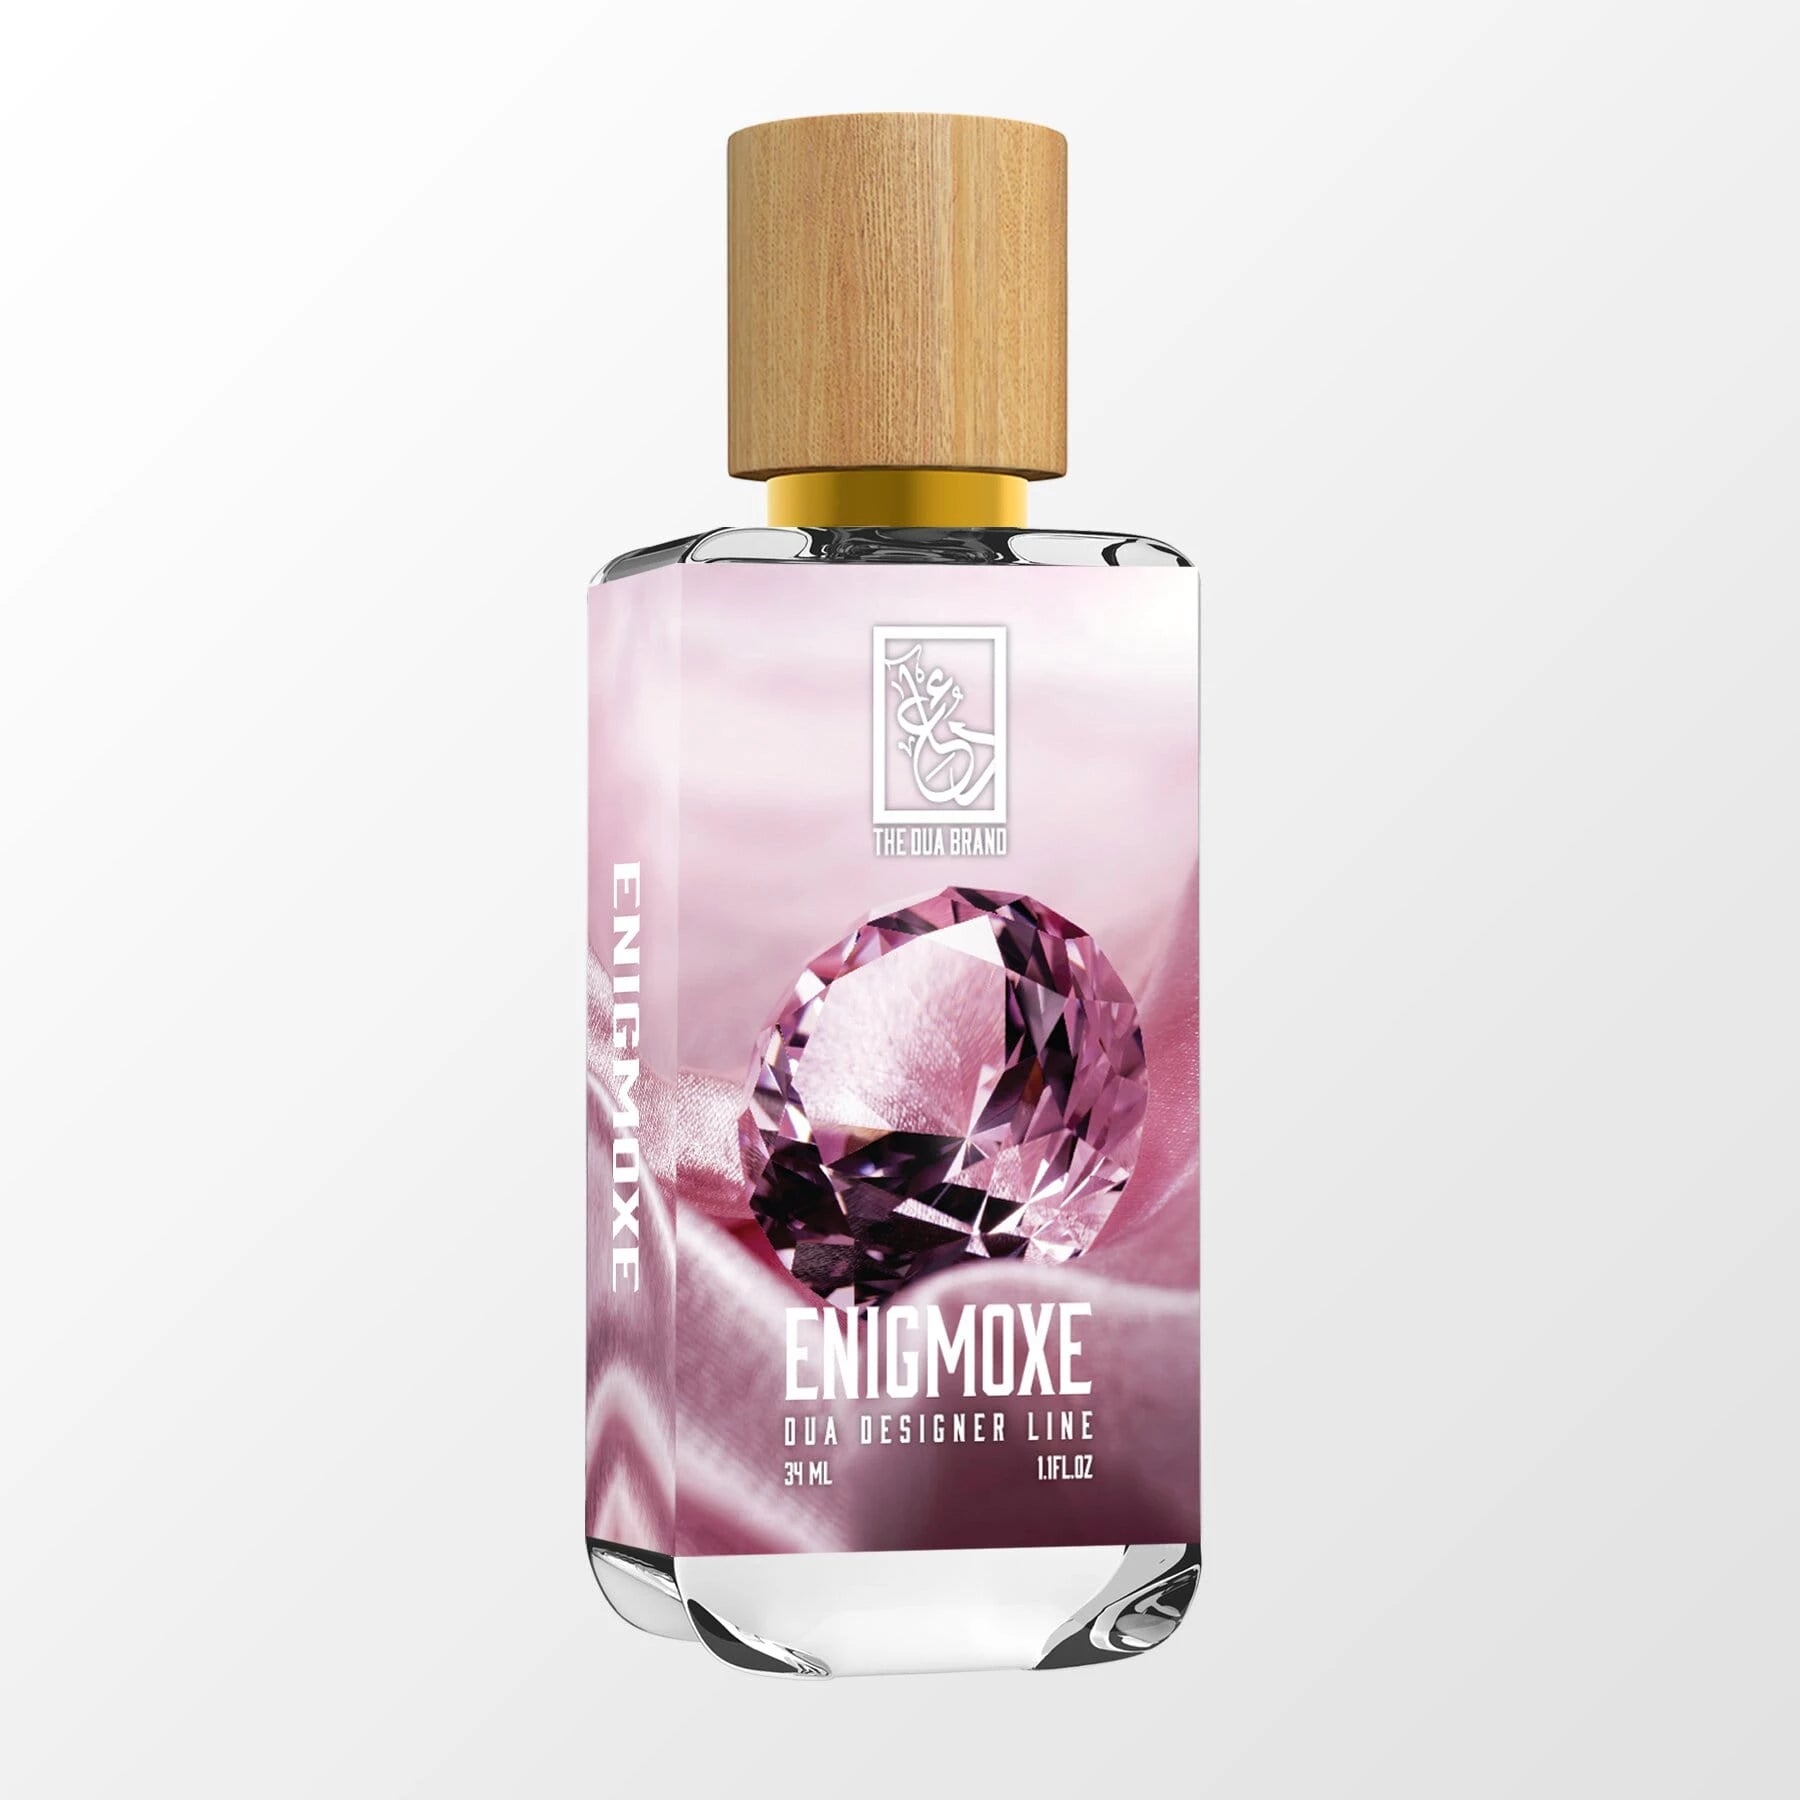 Enigmoxe - DUA FRAGRANCES - Inspired by Prada Paradoxe Prada - Feminine  Perfume - 34ml/1.1 FL OZ - Extrait De Parfum